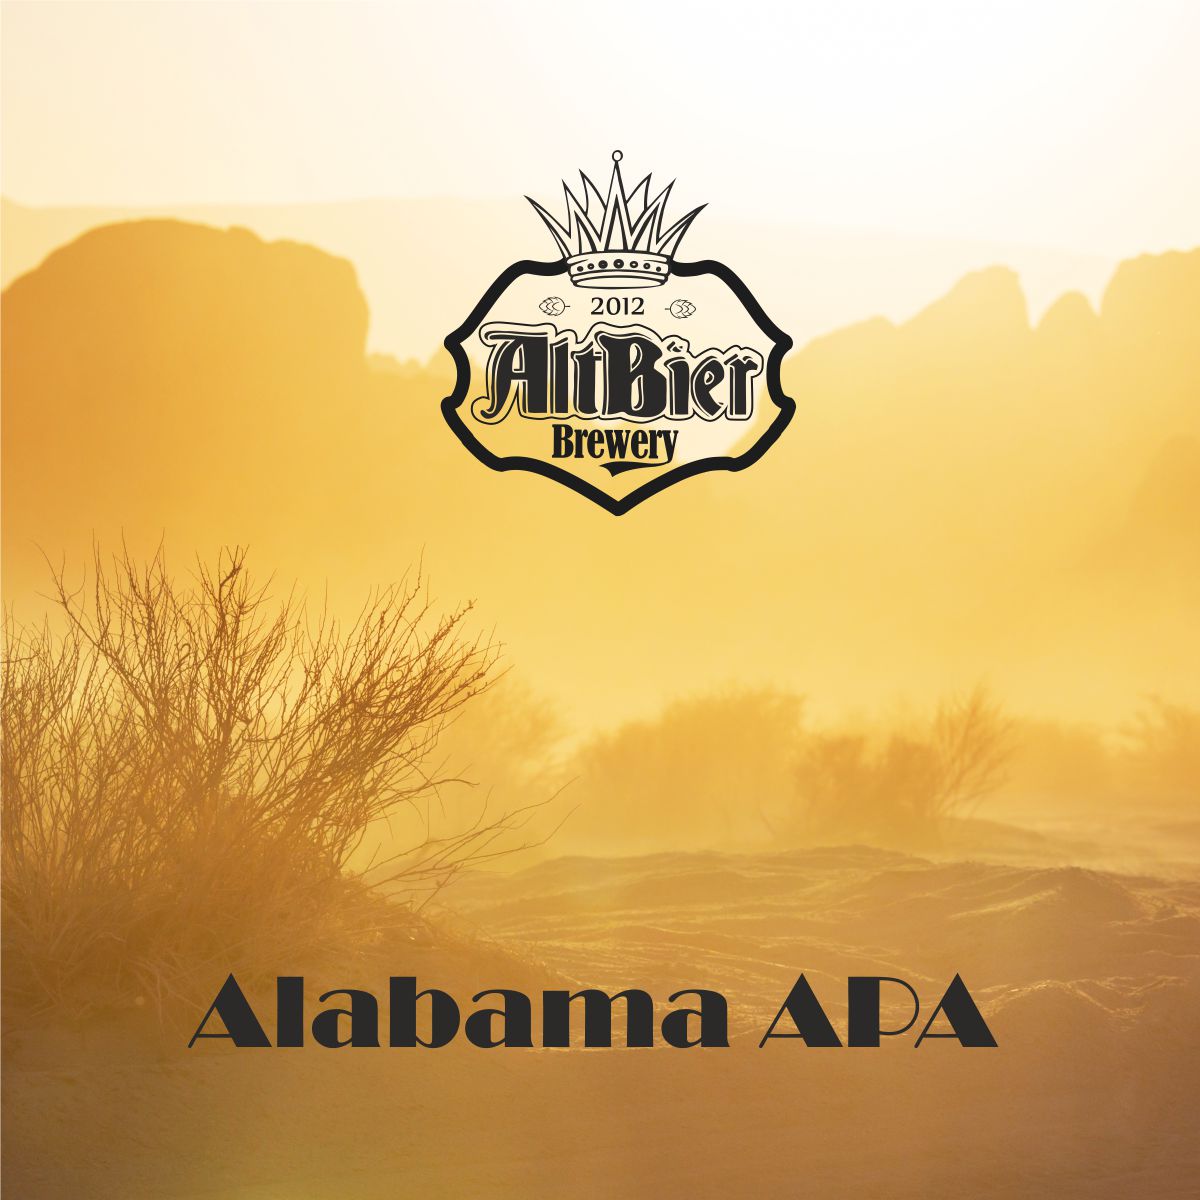 Вскоре Алабама! • AltBier Brewery г. Харьков